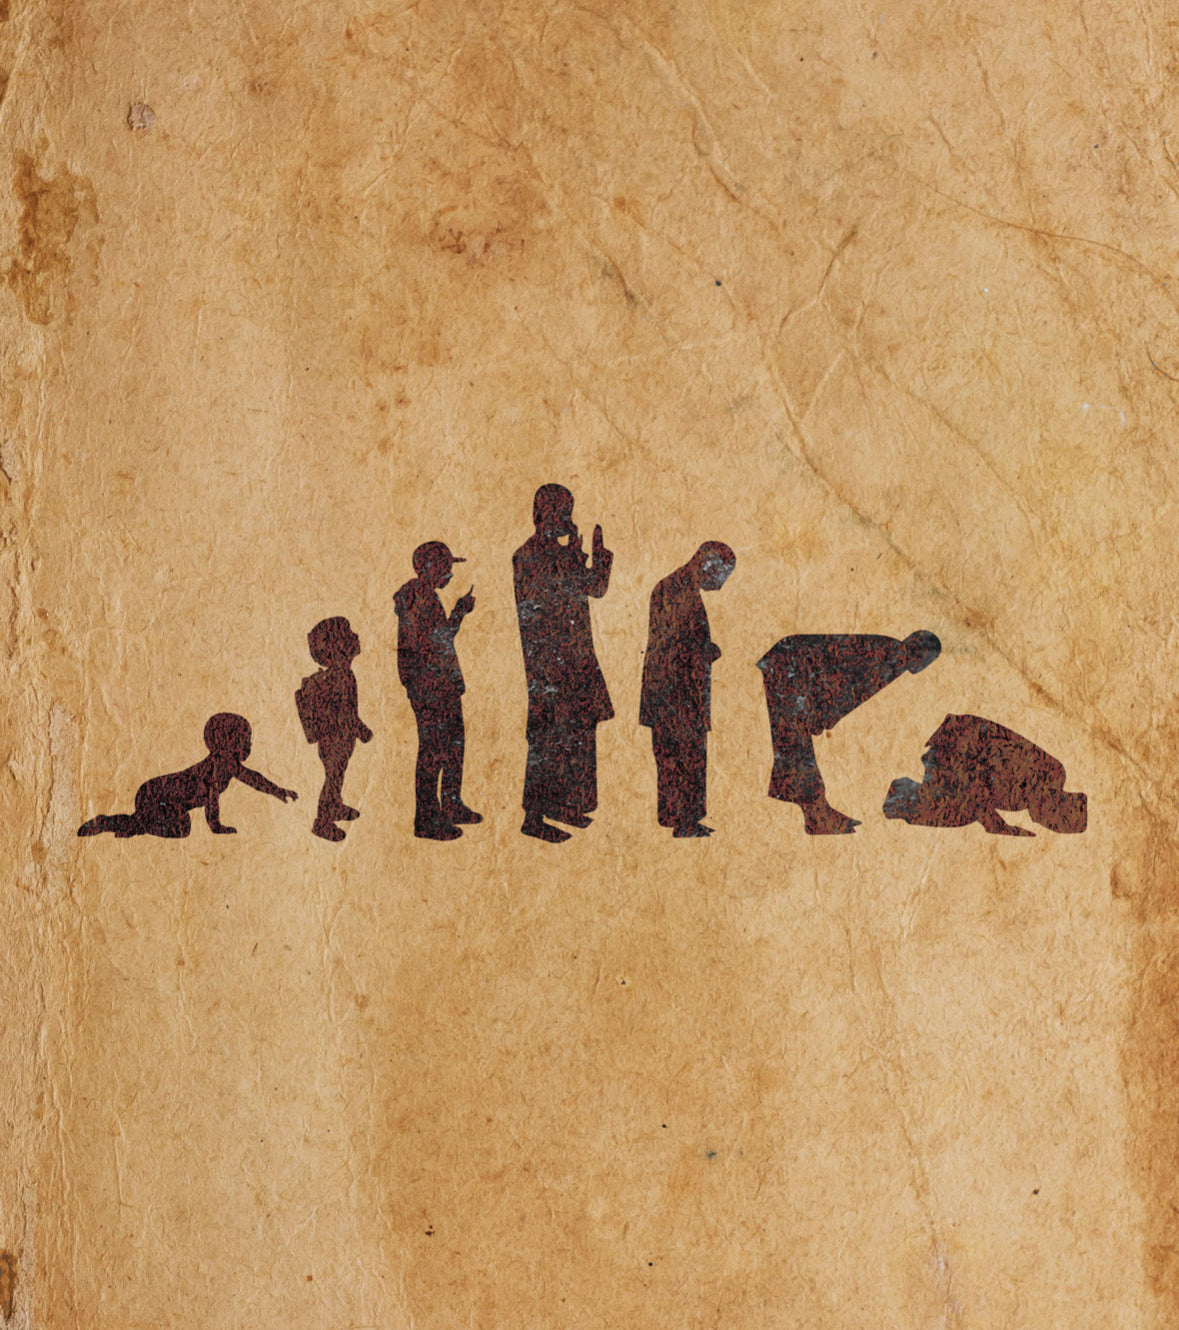 Islamic Evolution [16x20” Poster]